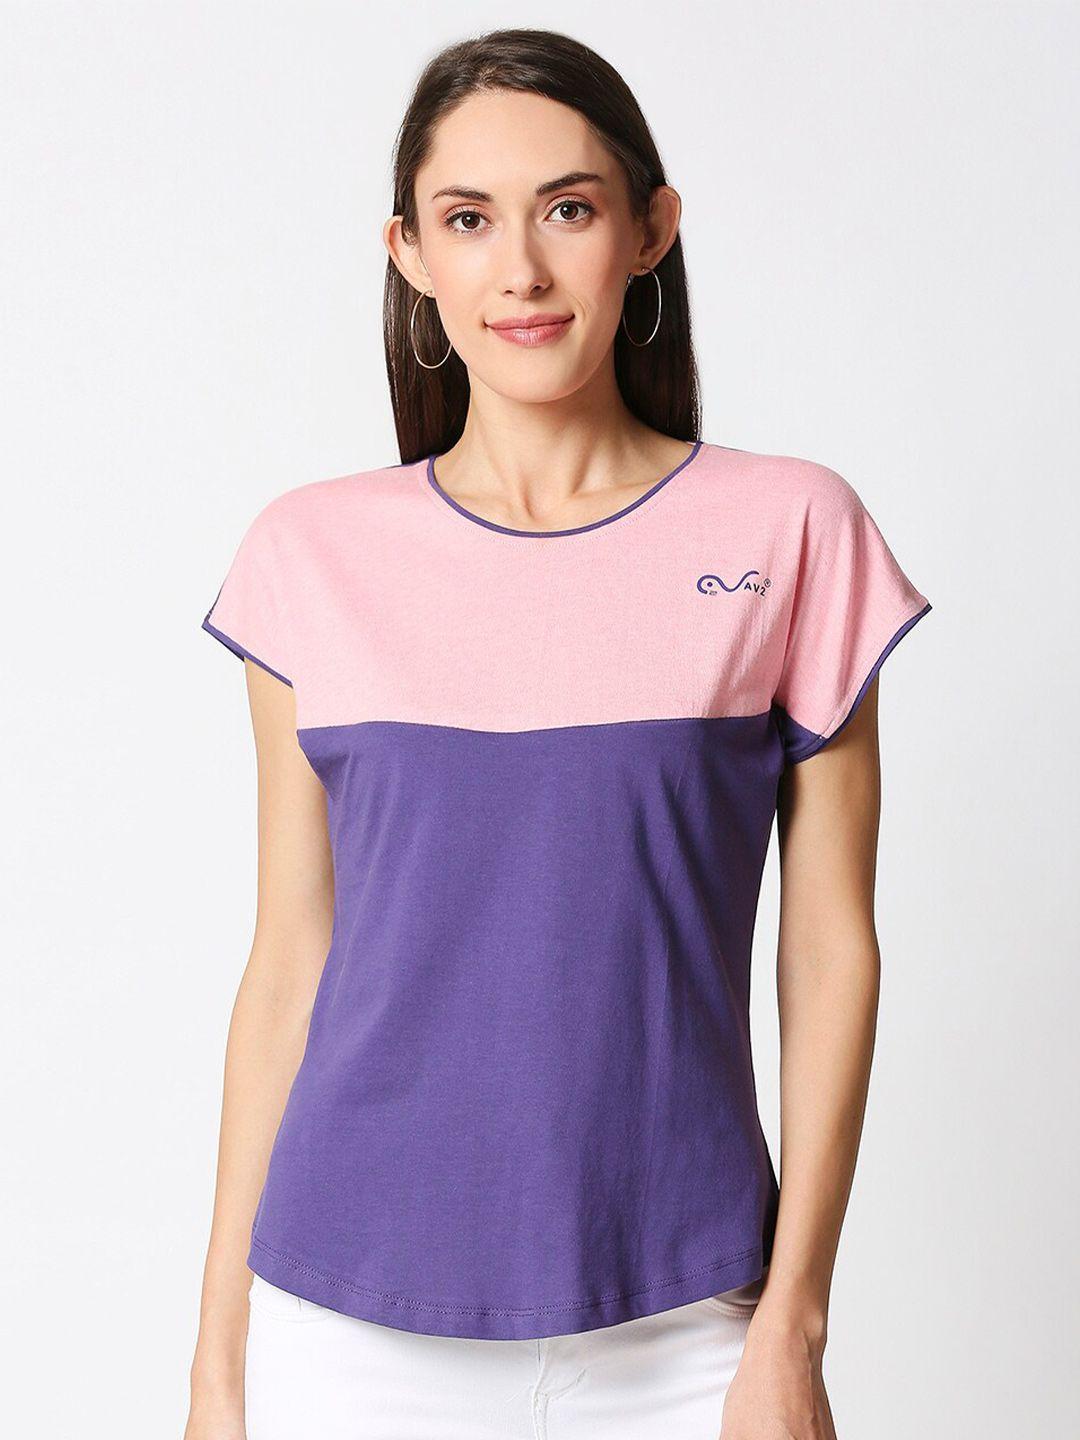 av2 purple & pink colourblocked extended sleeves top